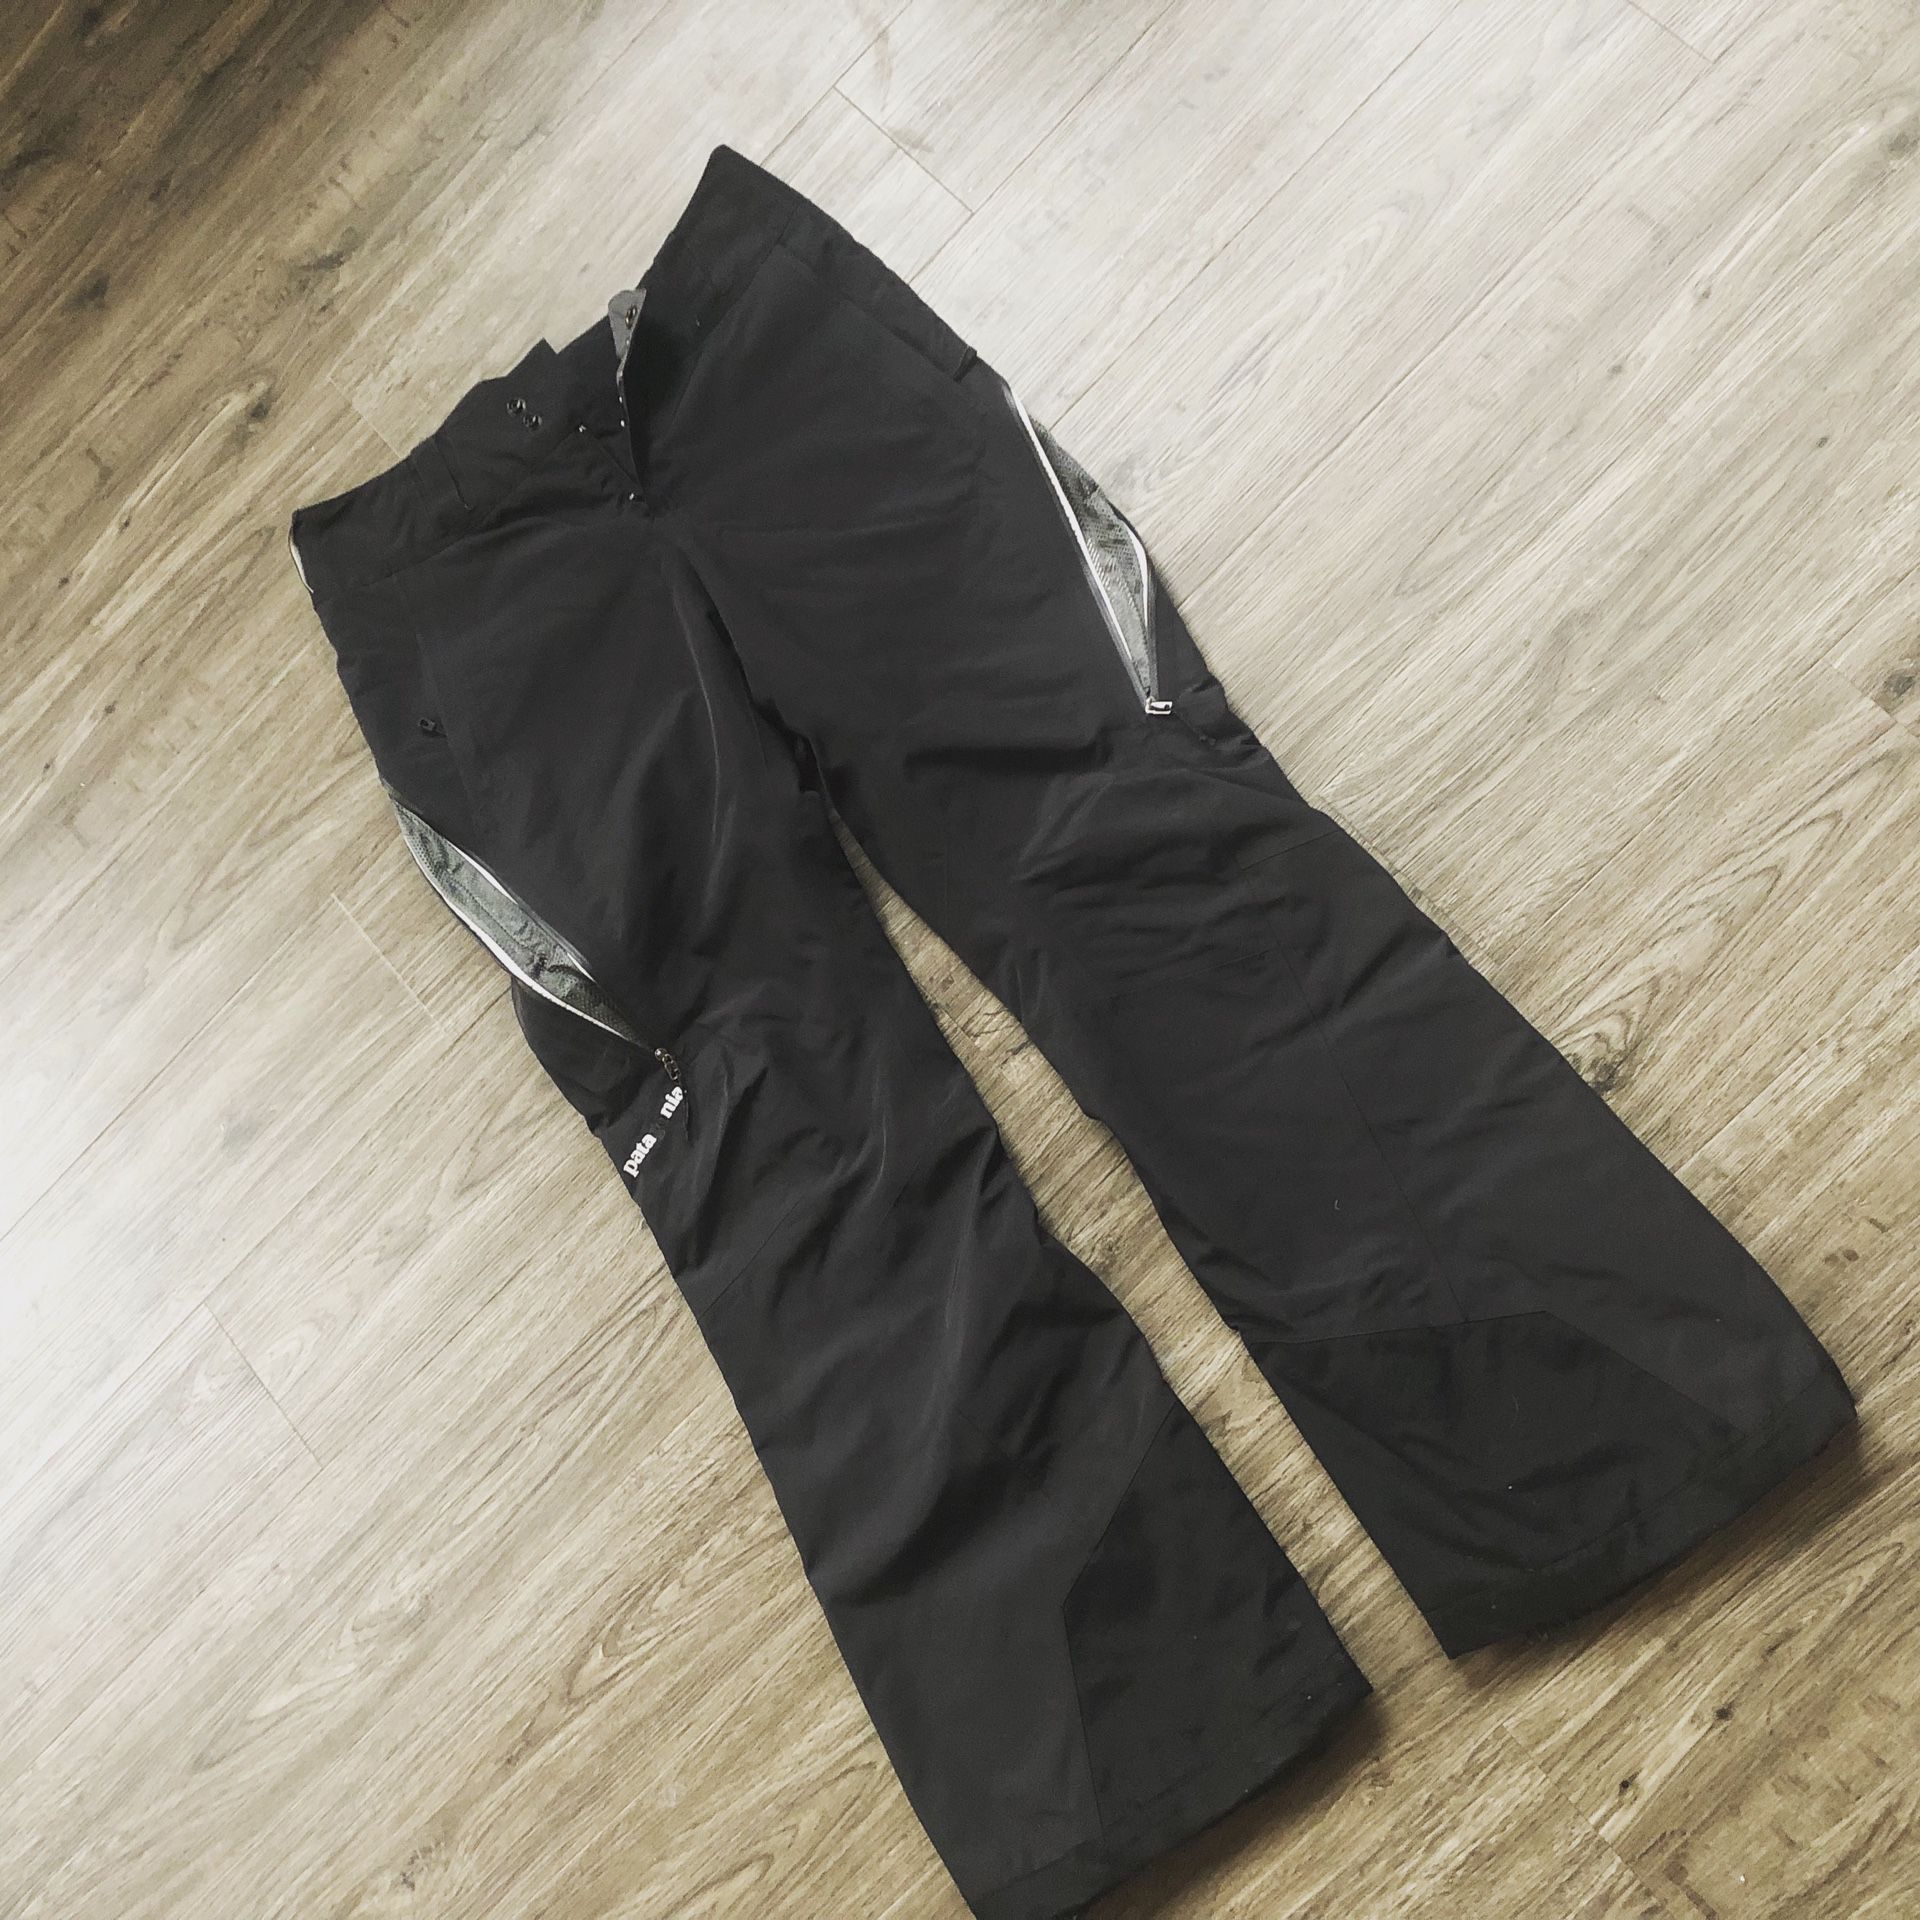 Patagonia Insulated ski pants, women’s medium